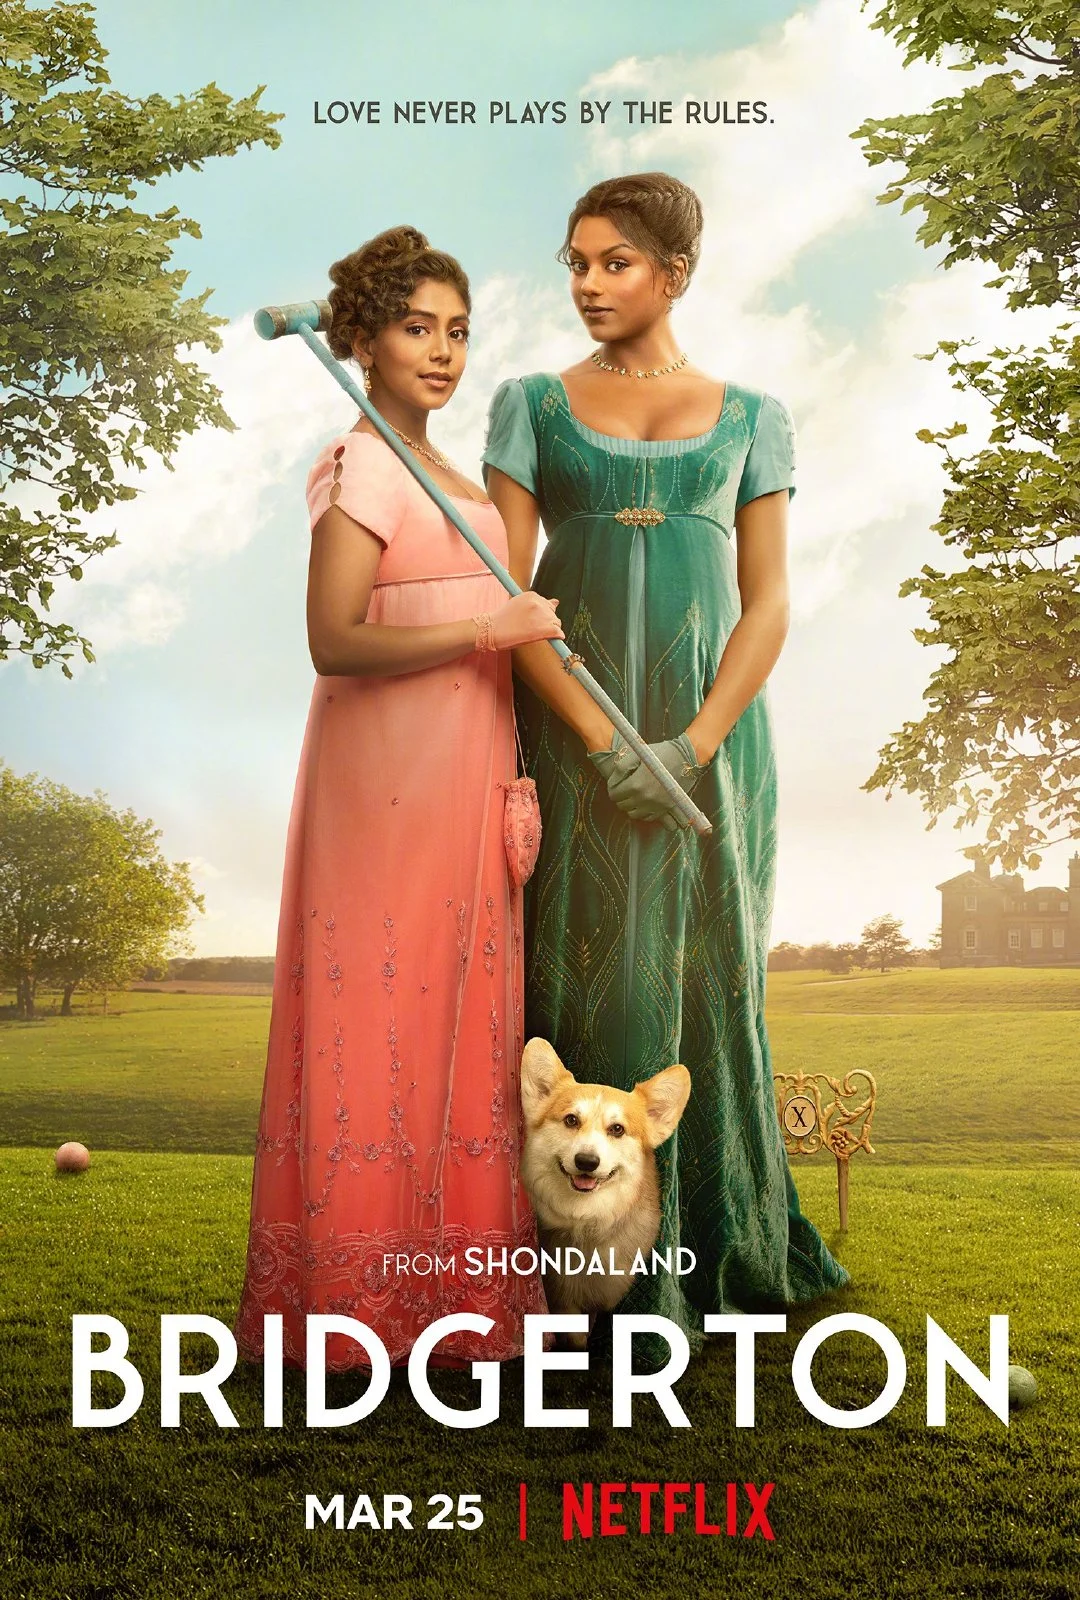 "Bridgerton Season 2" releases a set of character posters